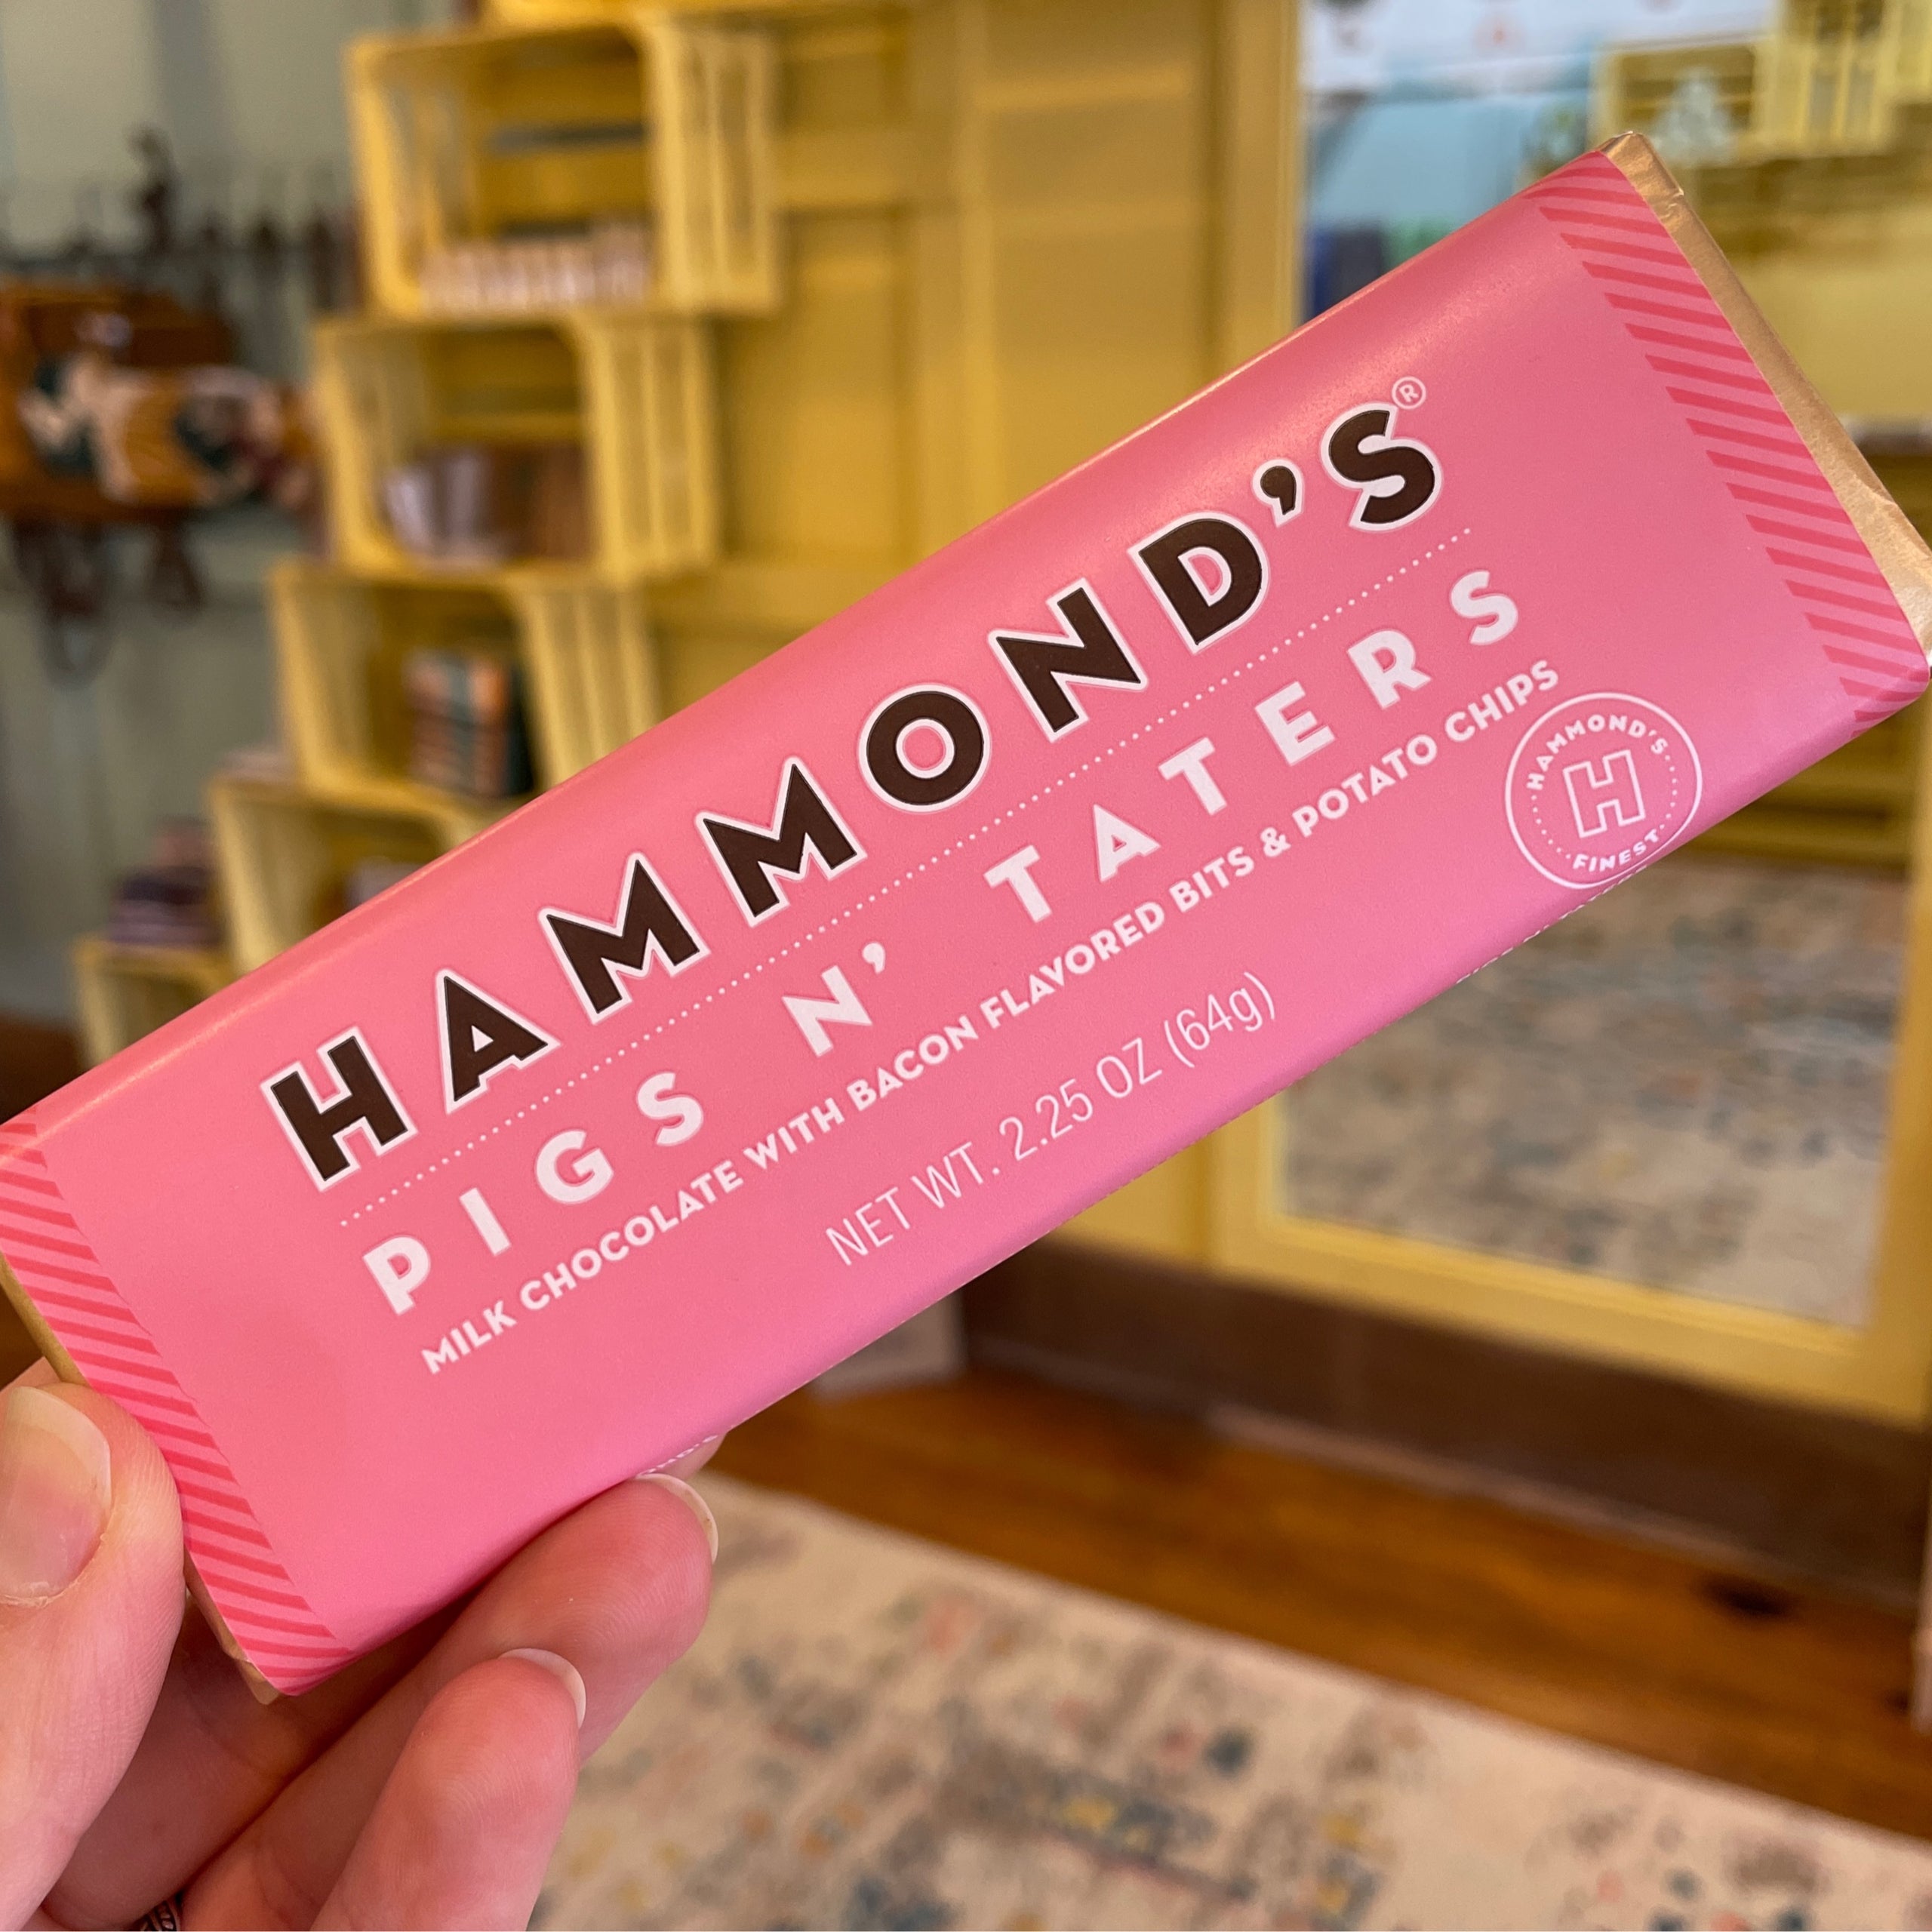 Hammond's Sea Side Caramel Milk Chocolate - 2.25 oz bar